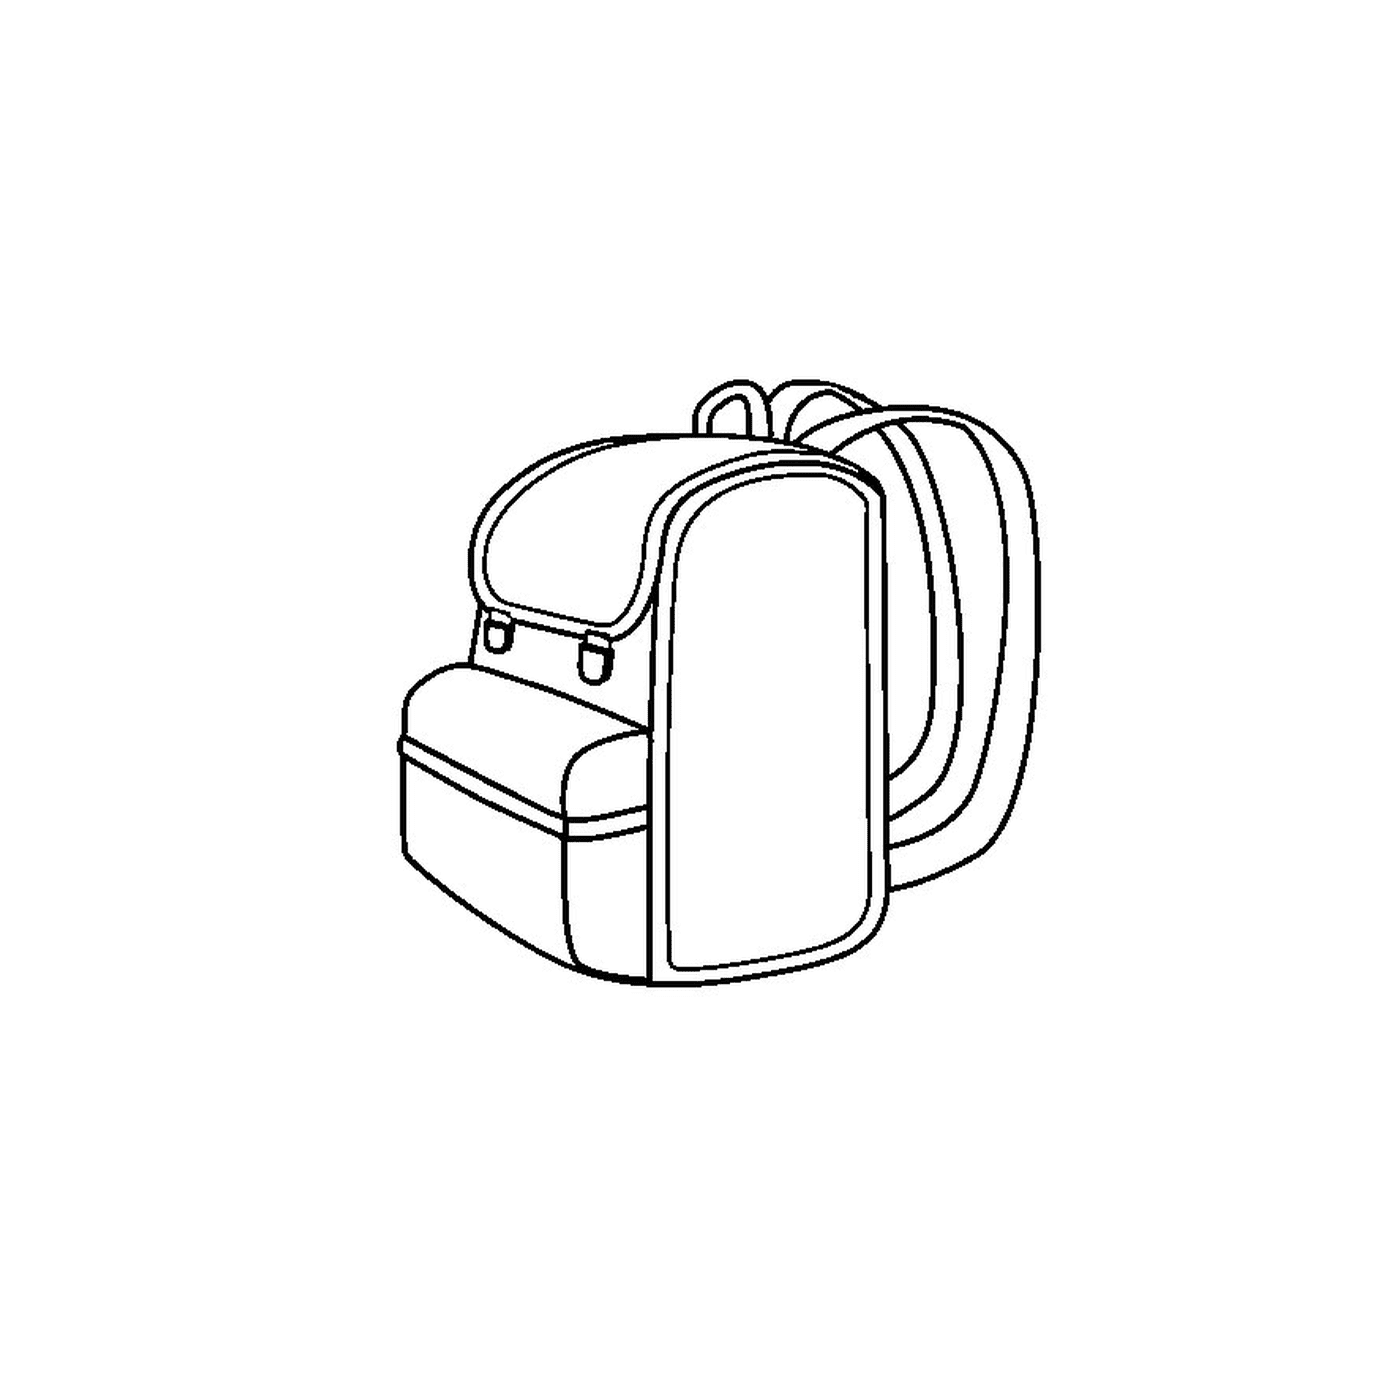  School bag 